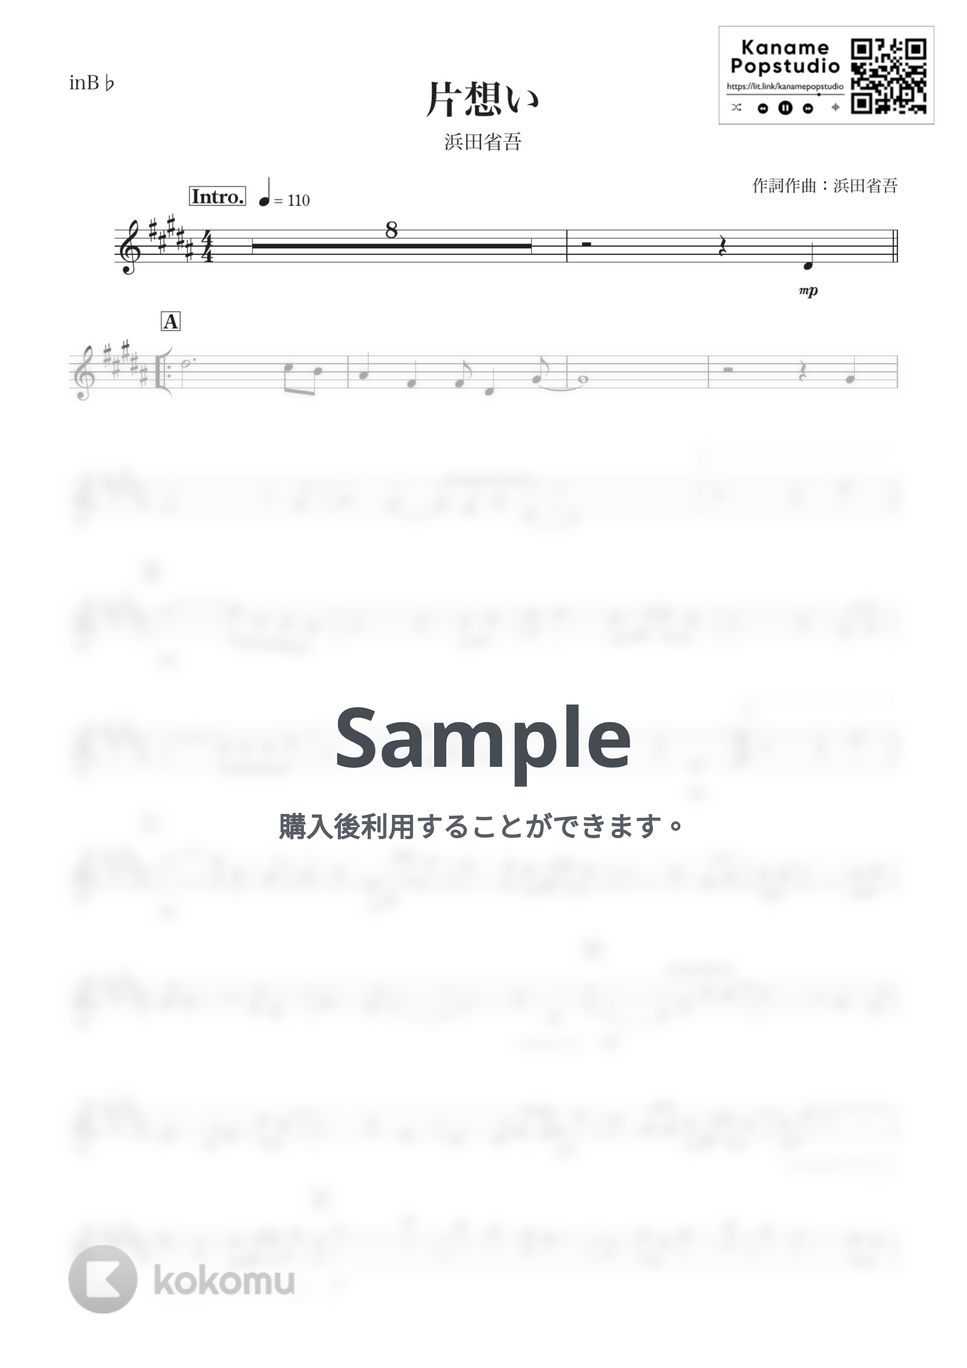 浜田省吾 - 片想い (B♭) by kanamusic